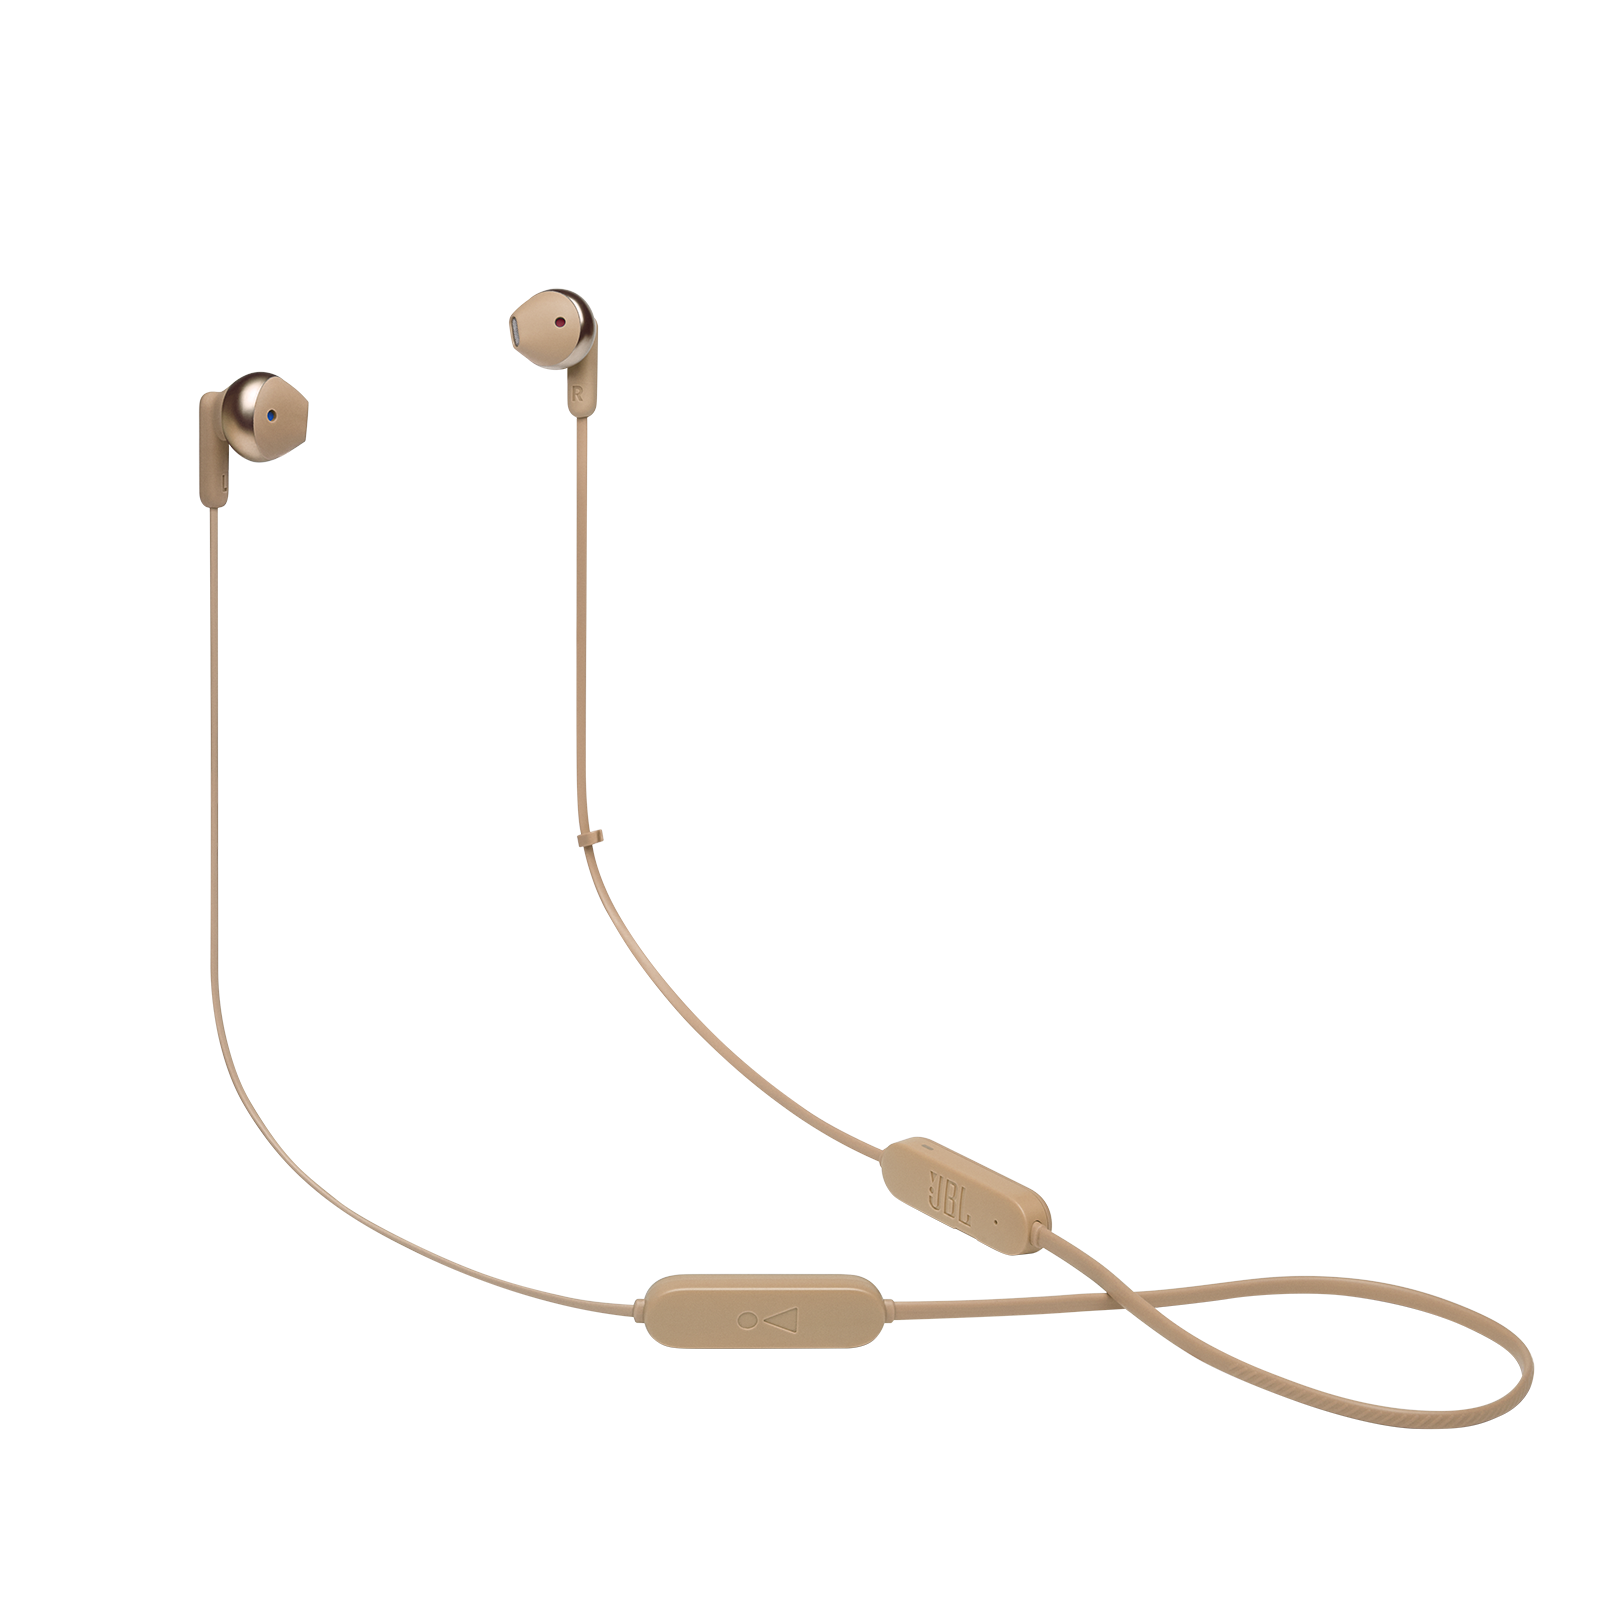 JBL Tune 215BT - Champagne Gold - Wireless Earbud headphones - Hero